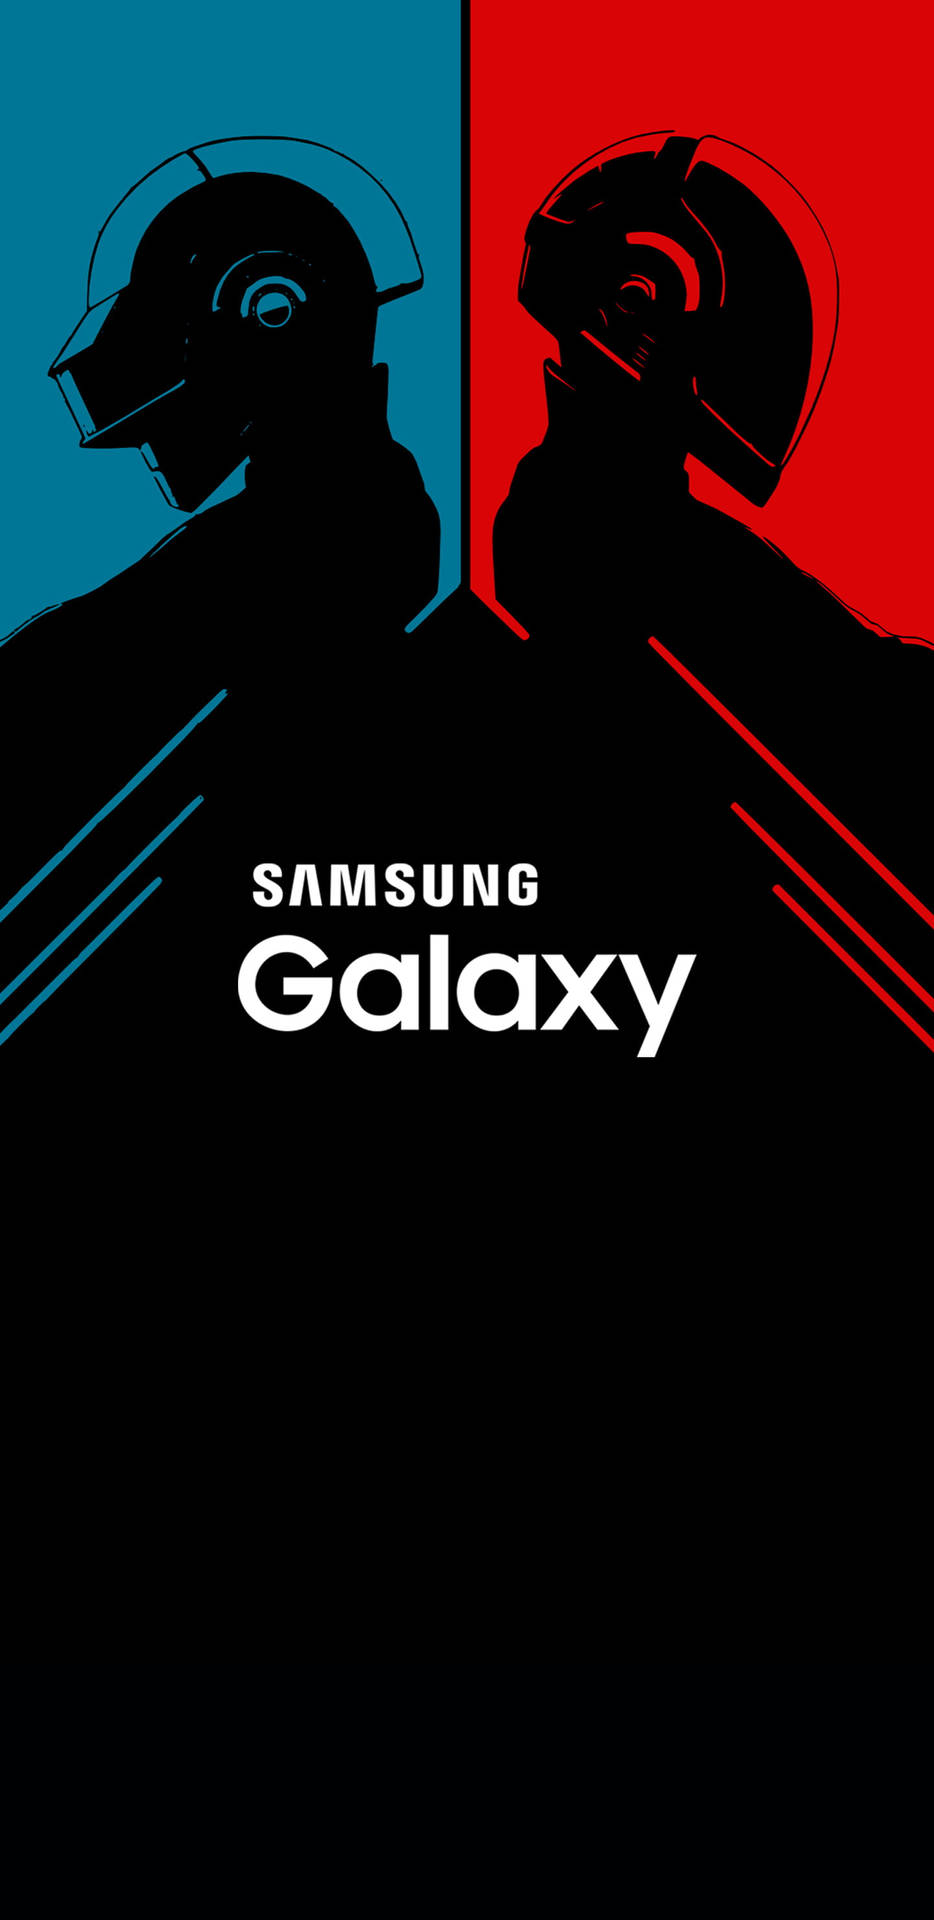 Samsung Galaxy Retro Daft Punk Picture